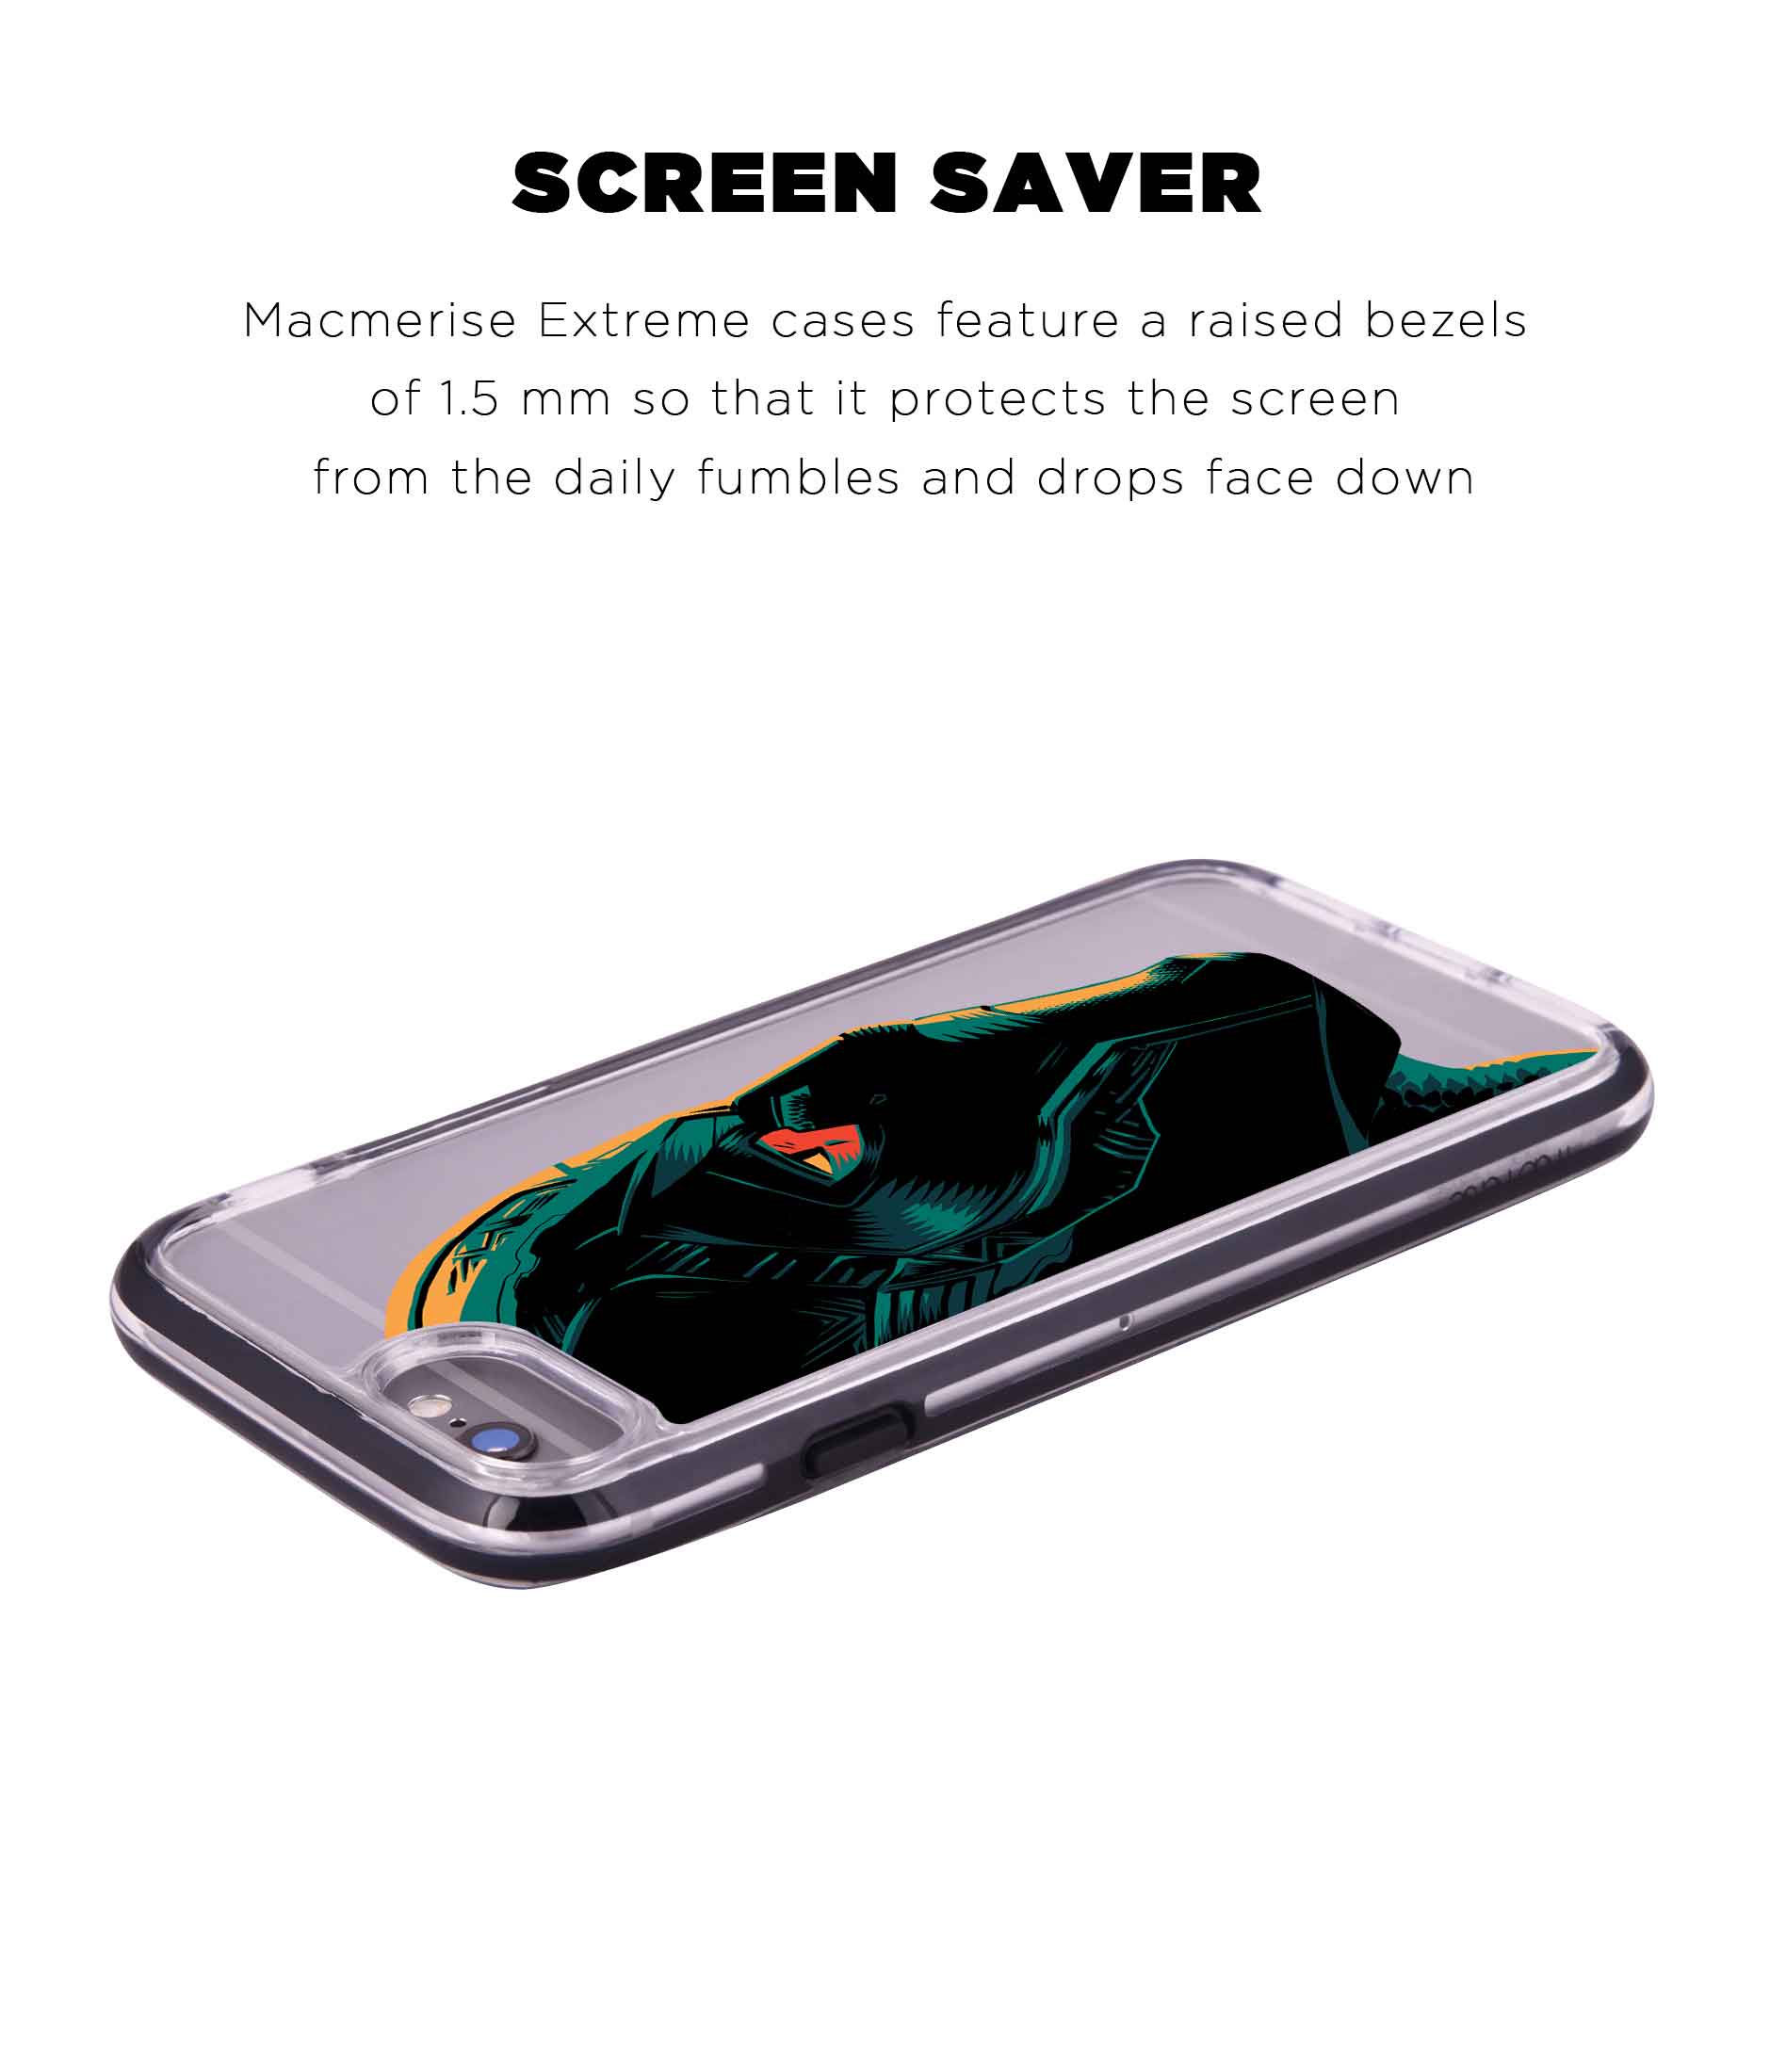 Illuminated Black Panther - Extreme Phone Case for iPhone 6